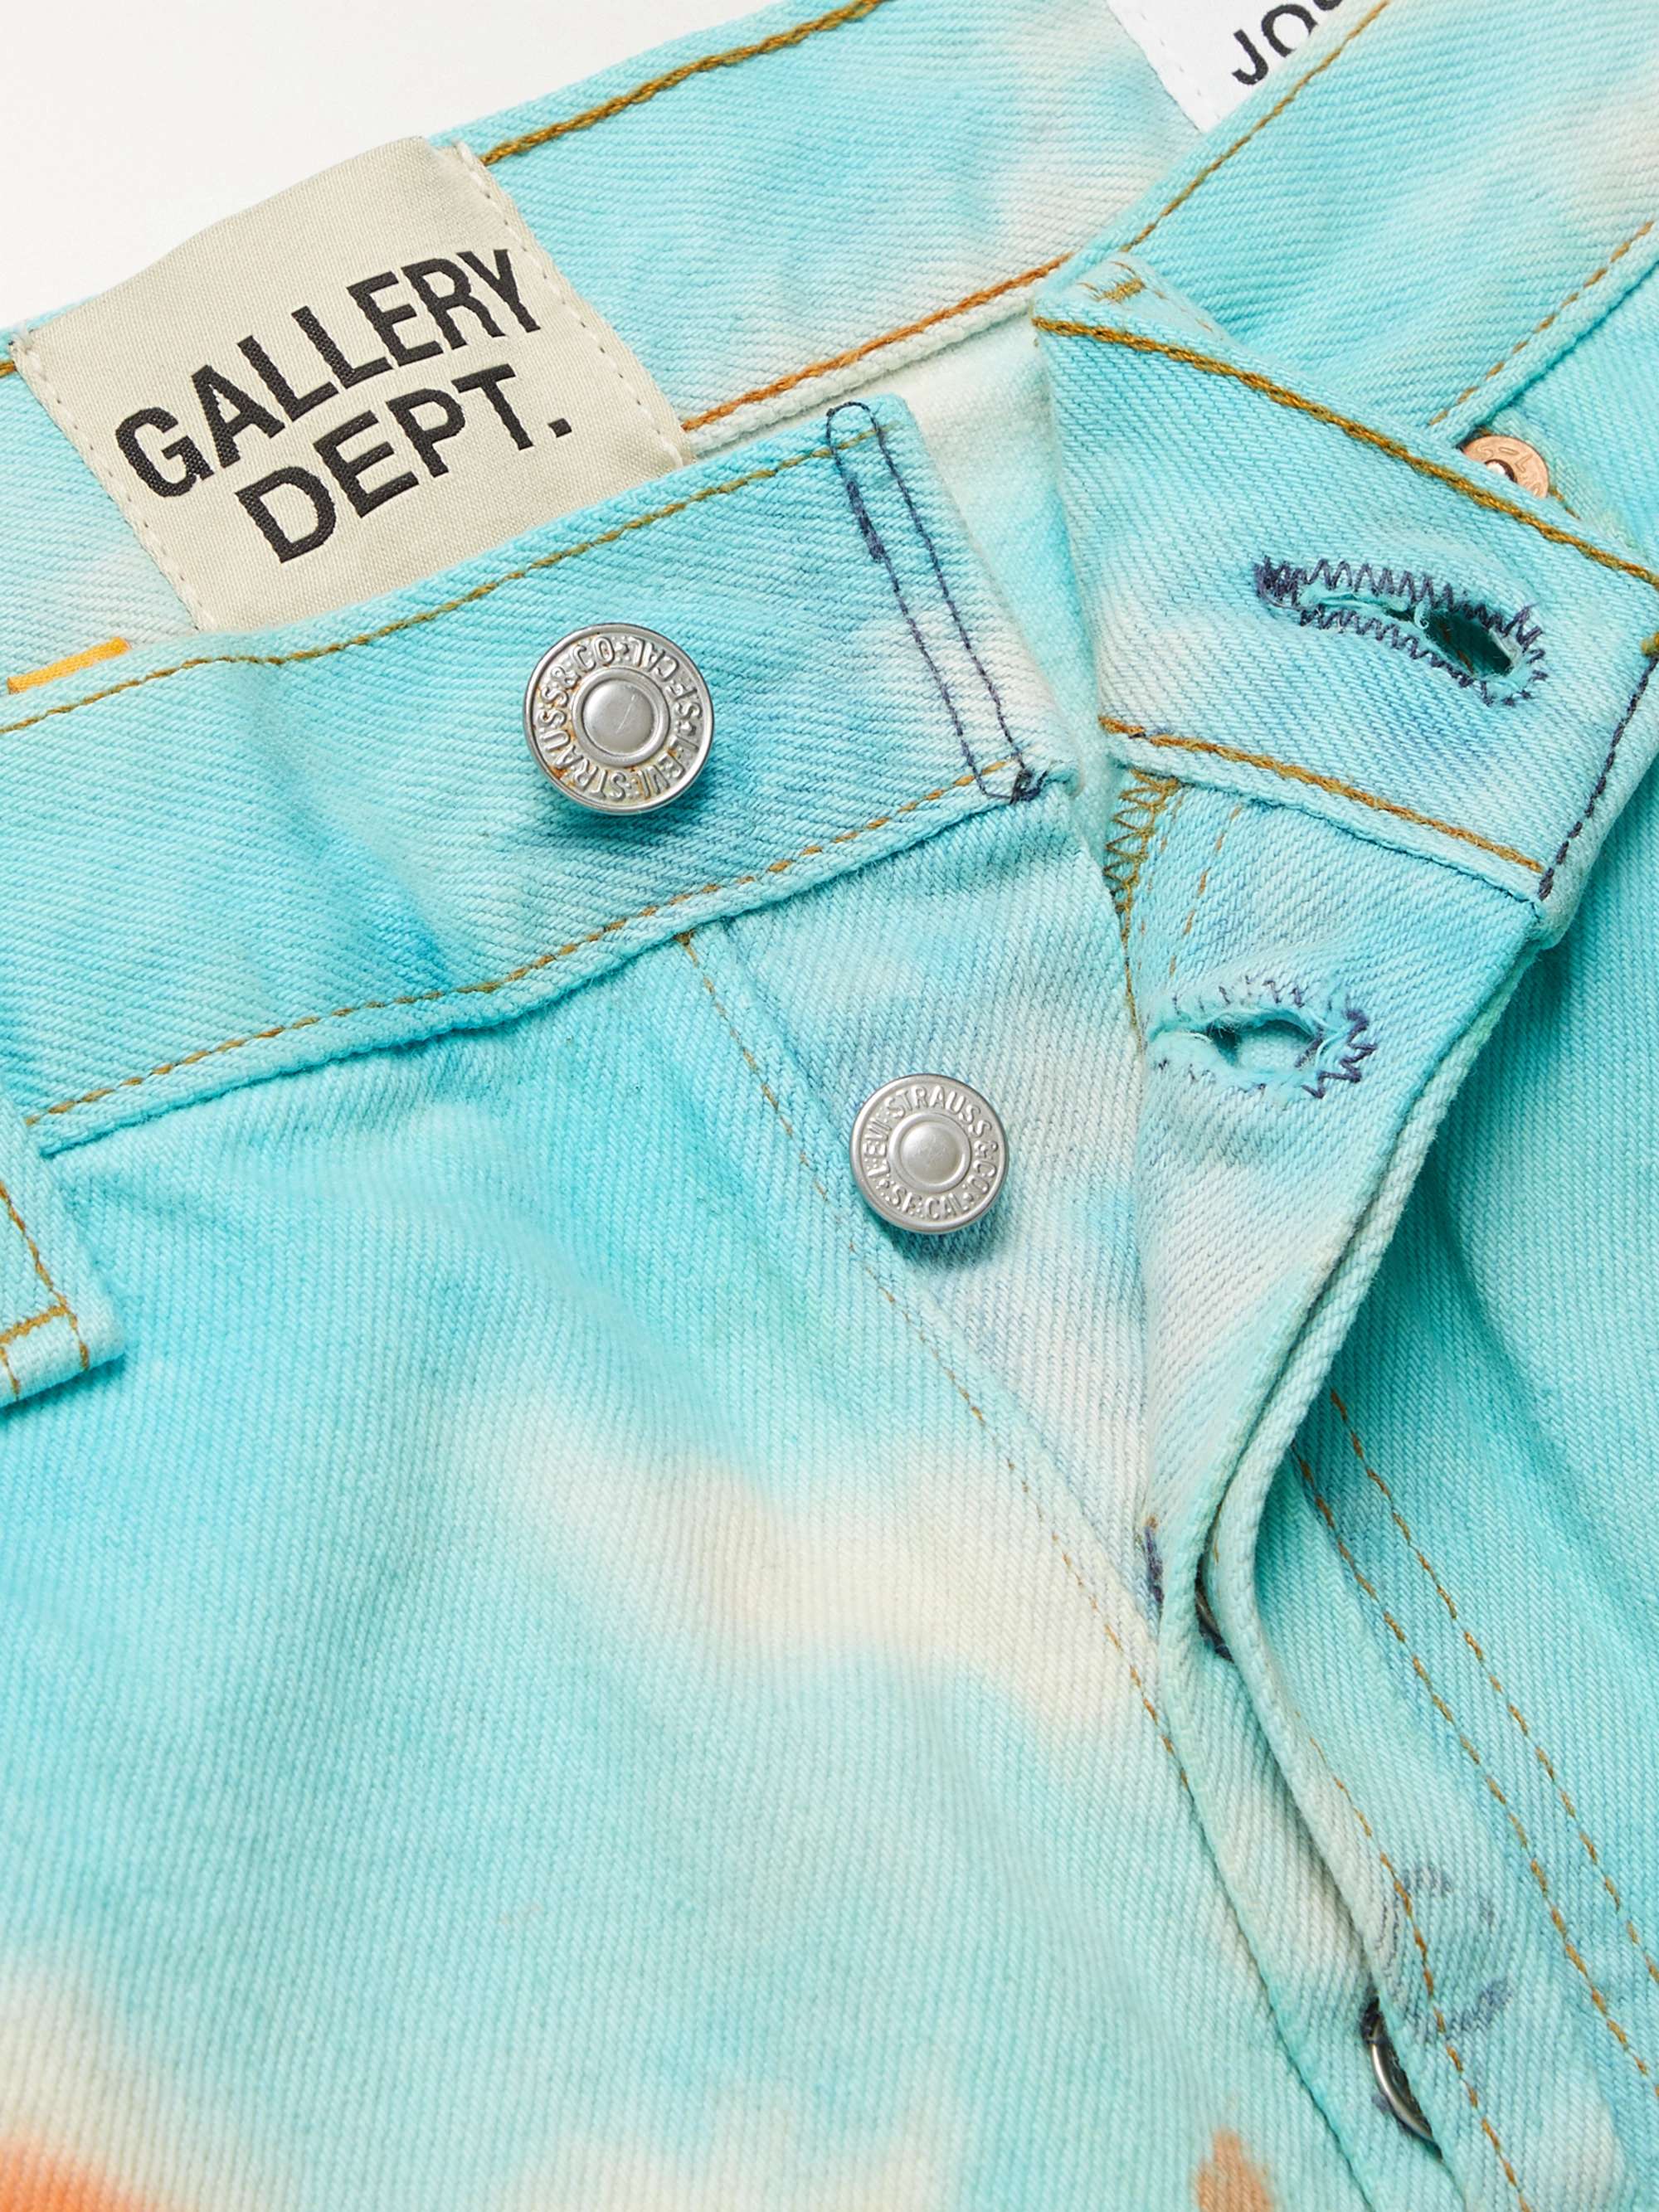 GALLERY DEPT. Marley Distressed Tie-Dyed Denim Jeans